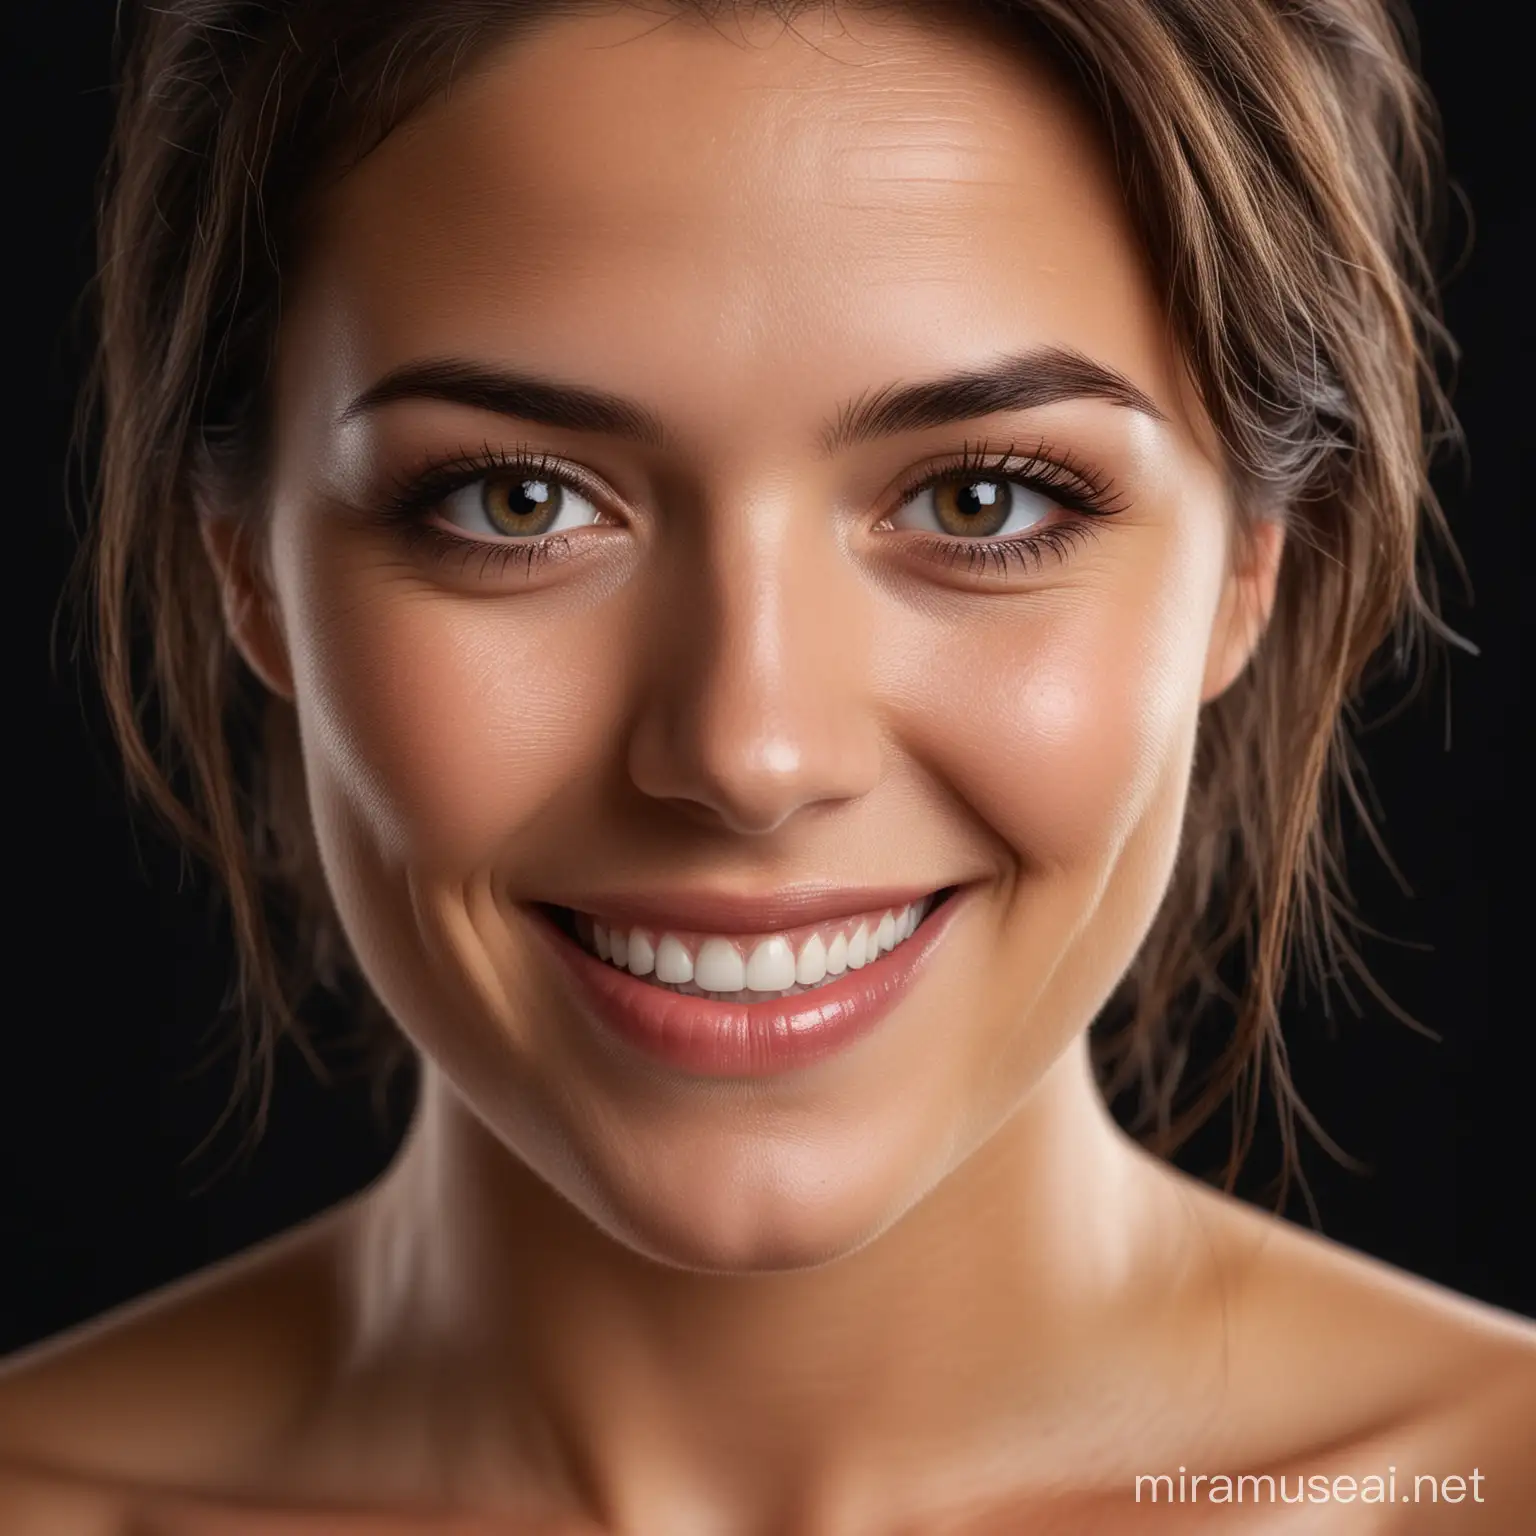 CloseUp Portrait of Smiling Woman on Dark Background